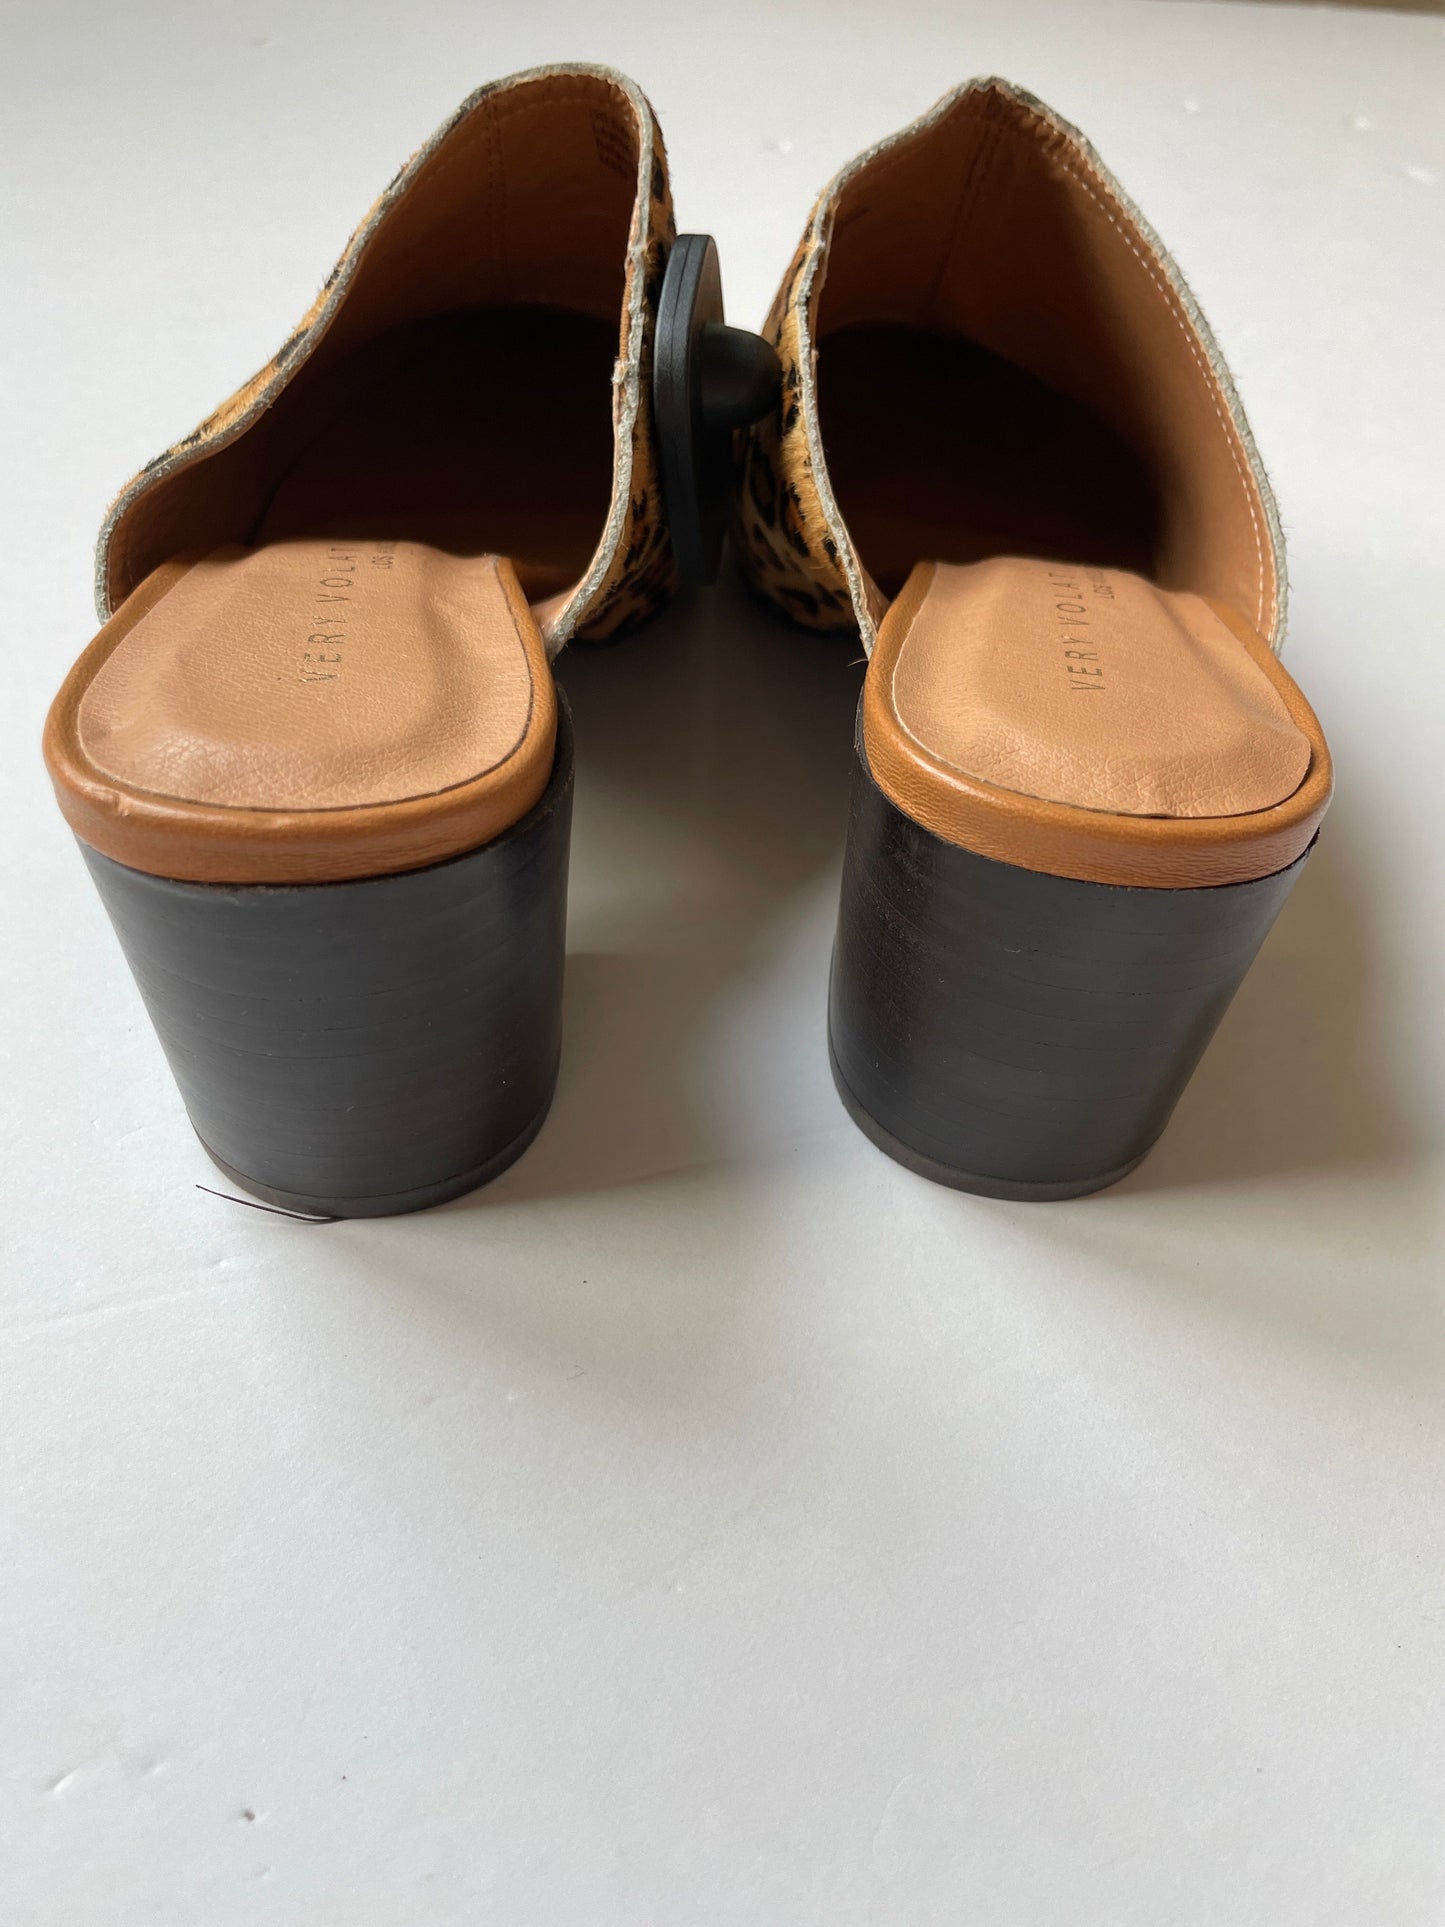 Animal Print Shoes Heels Block Very Volatile, Size 9